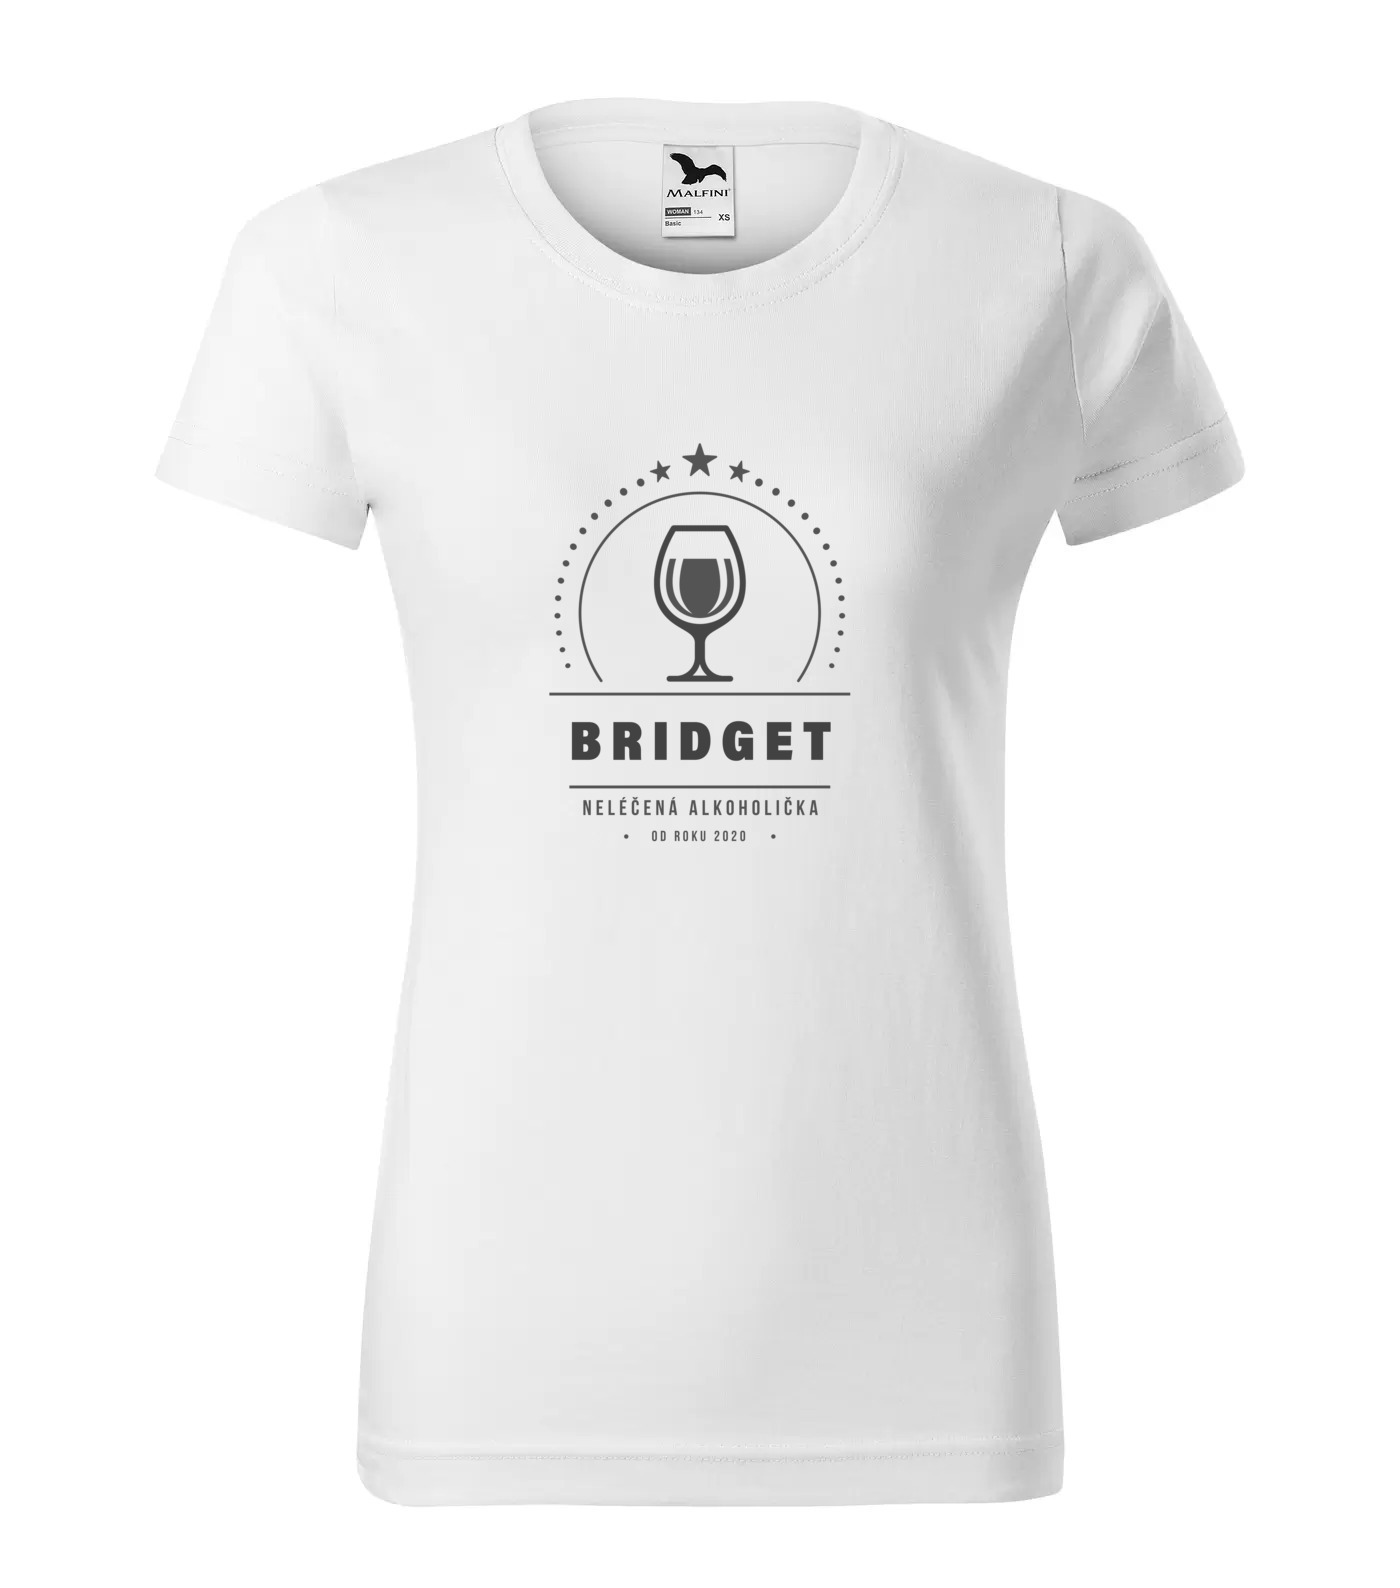 Tričko Alkoholička Bridget